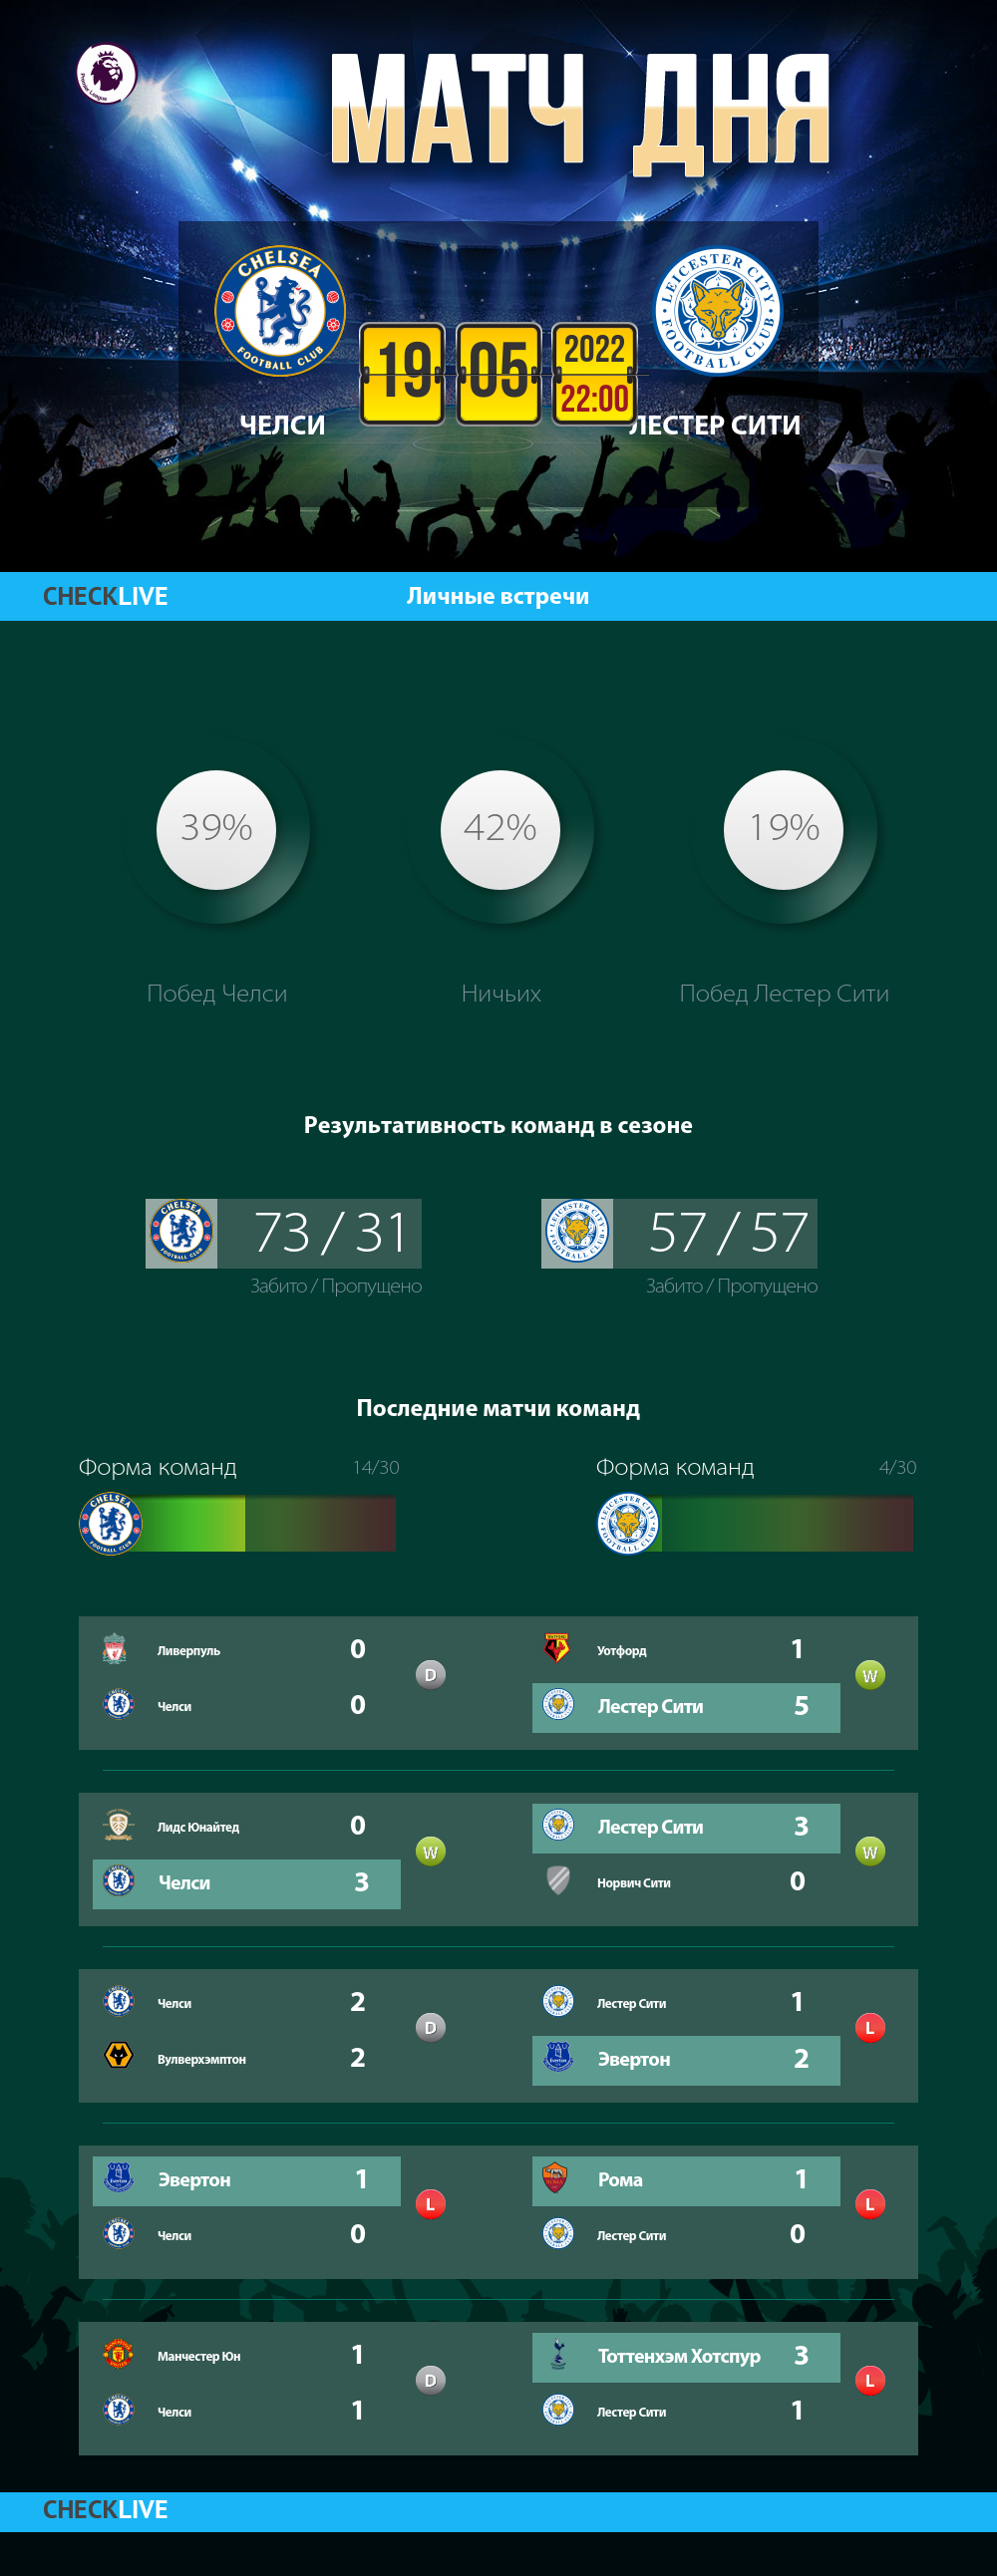 Инфографика Челси и Лестер Сити матч дня 19.05.2022